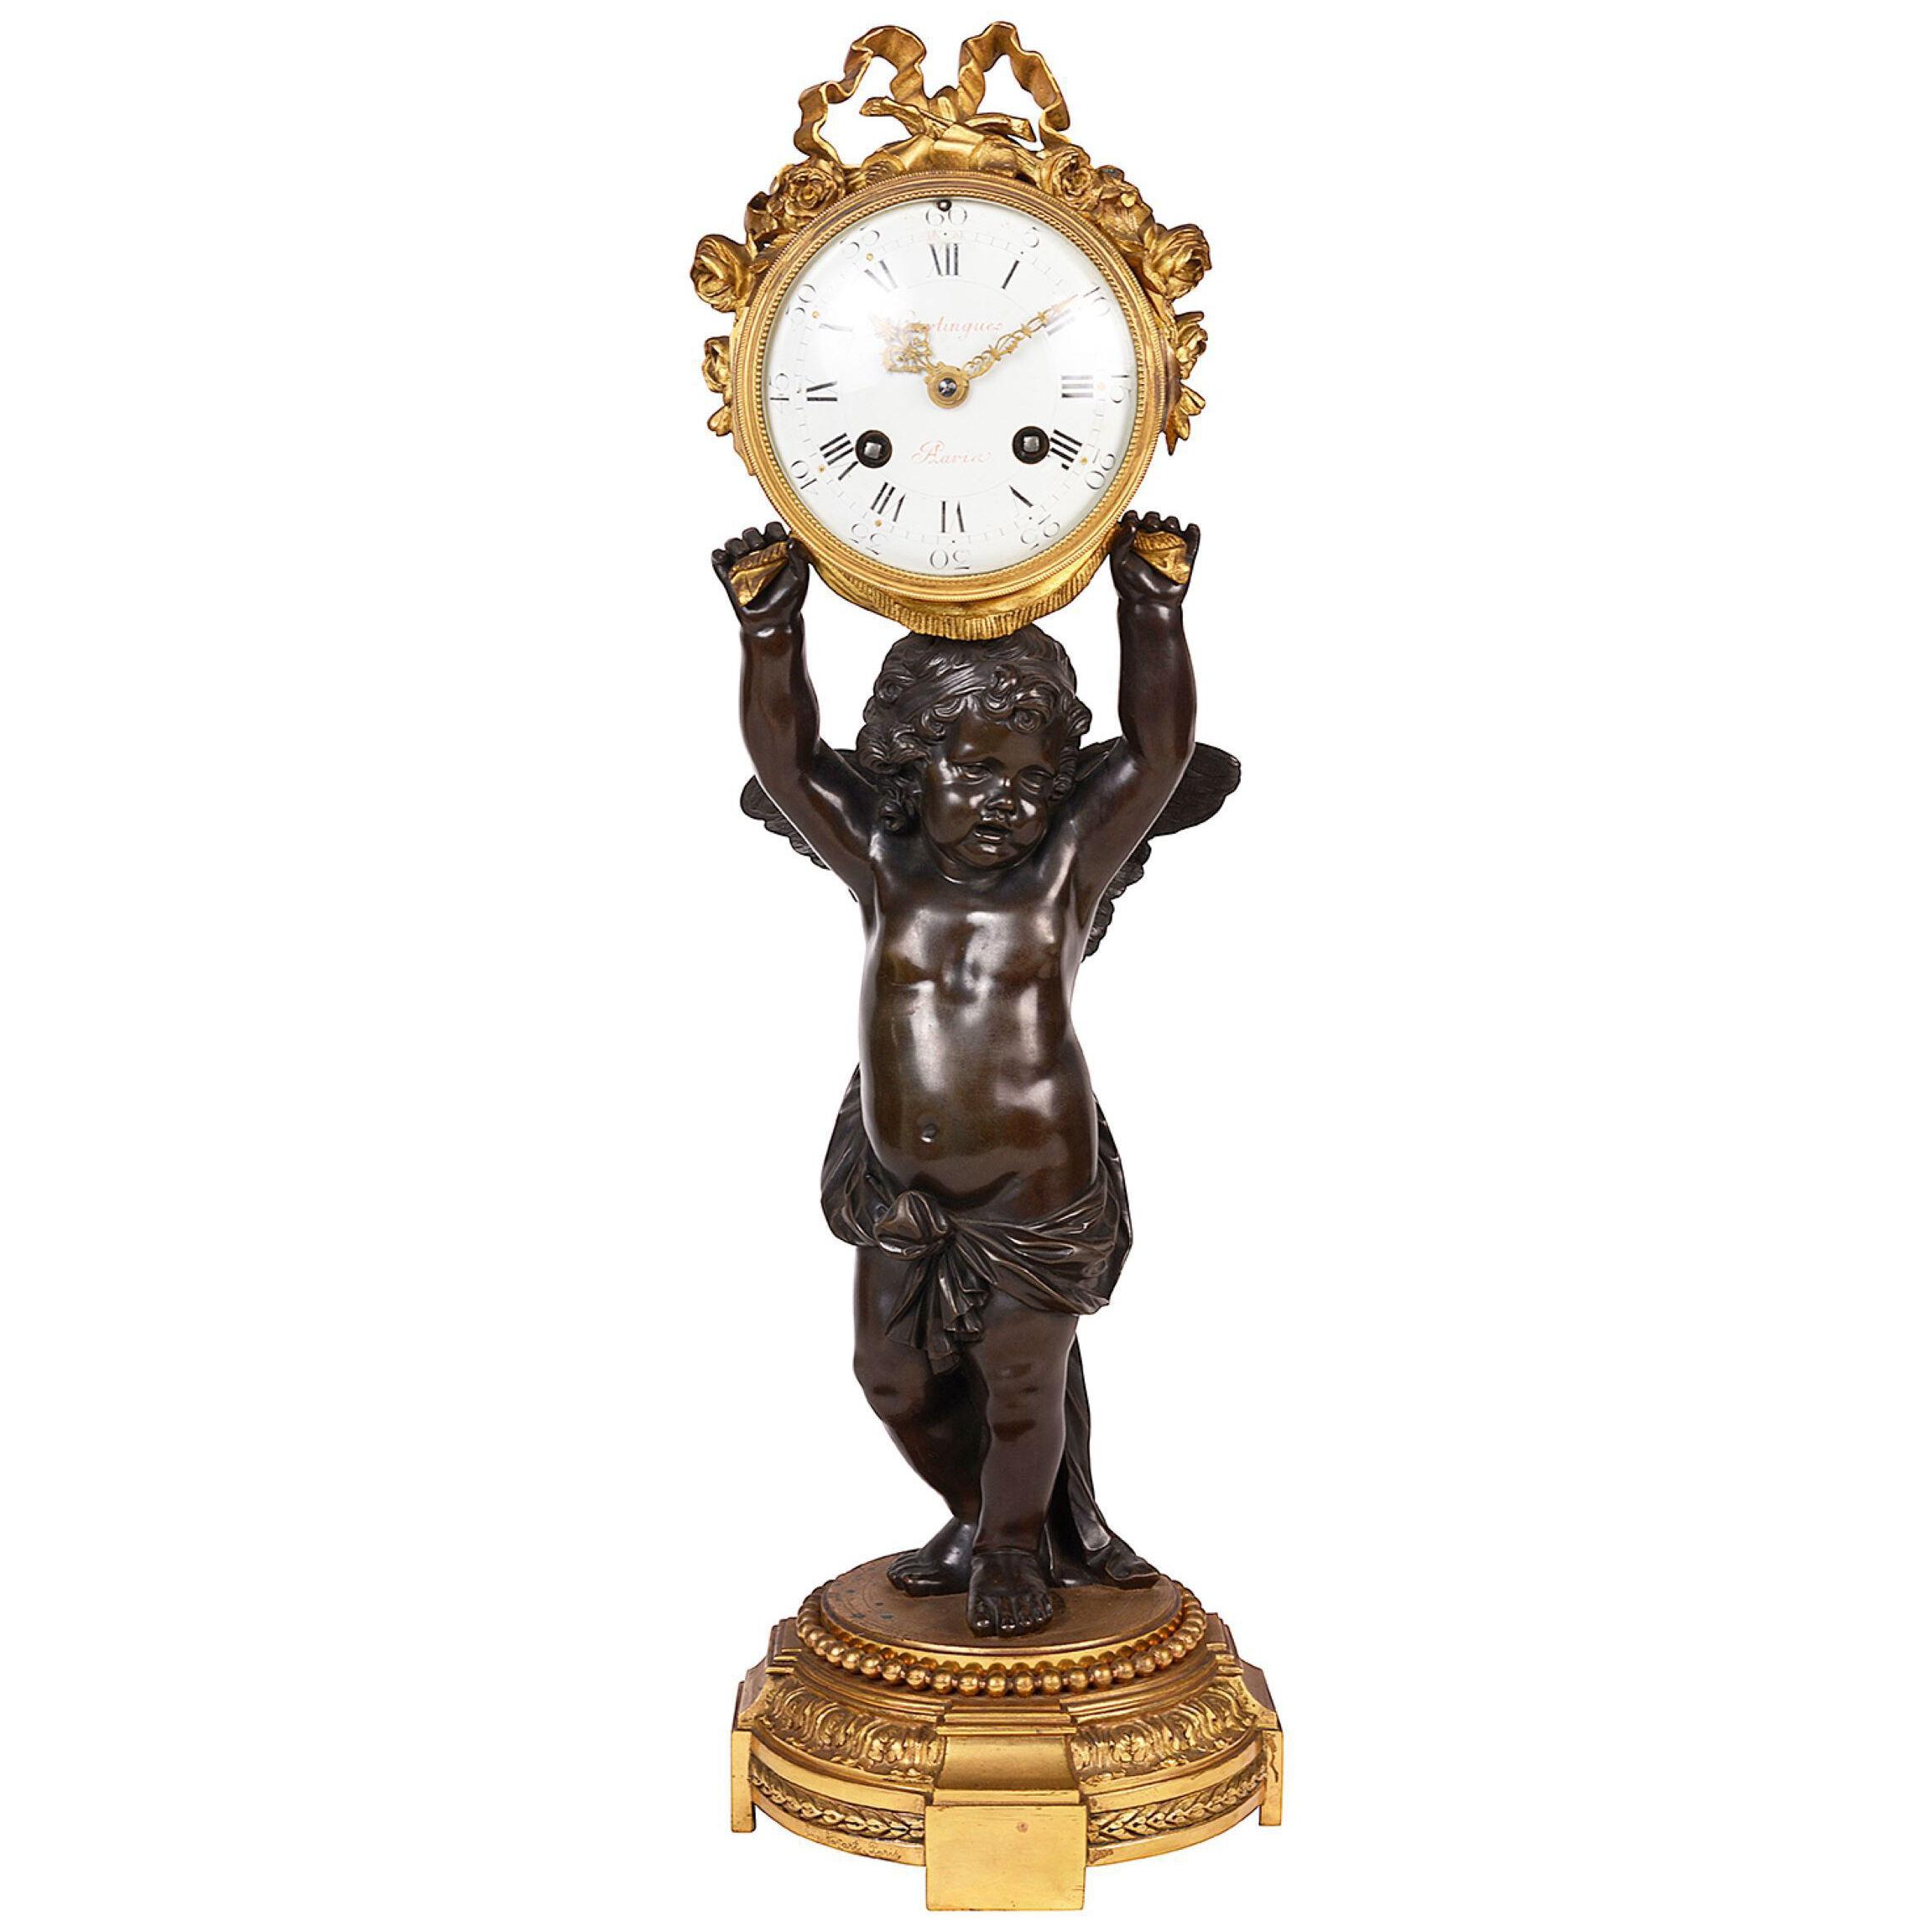 A classical French bronze & ormolu striking mantel clock